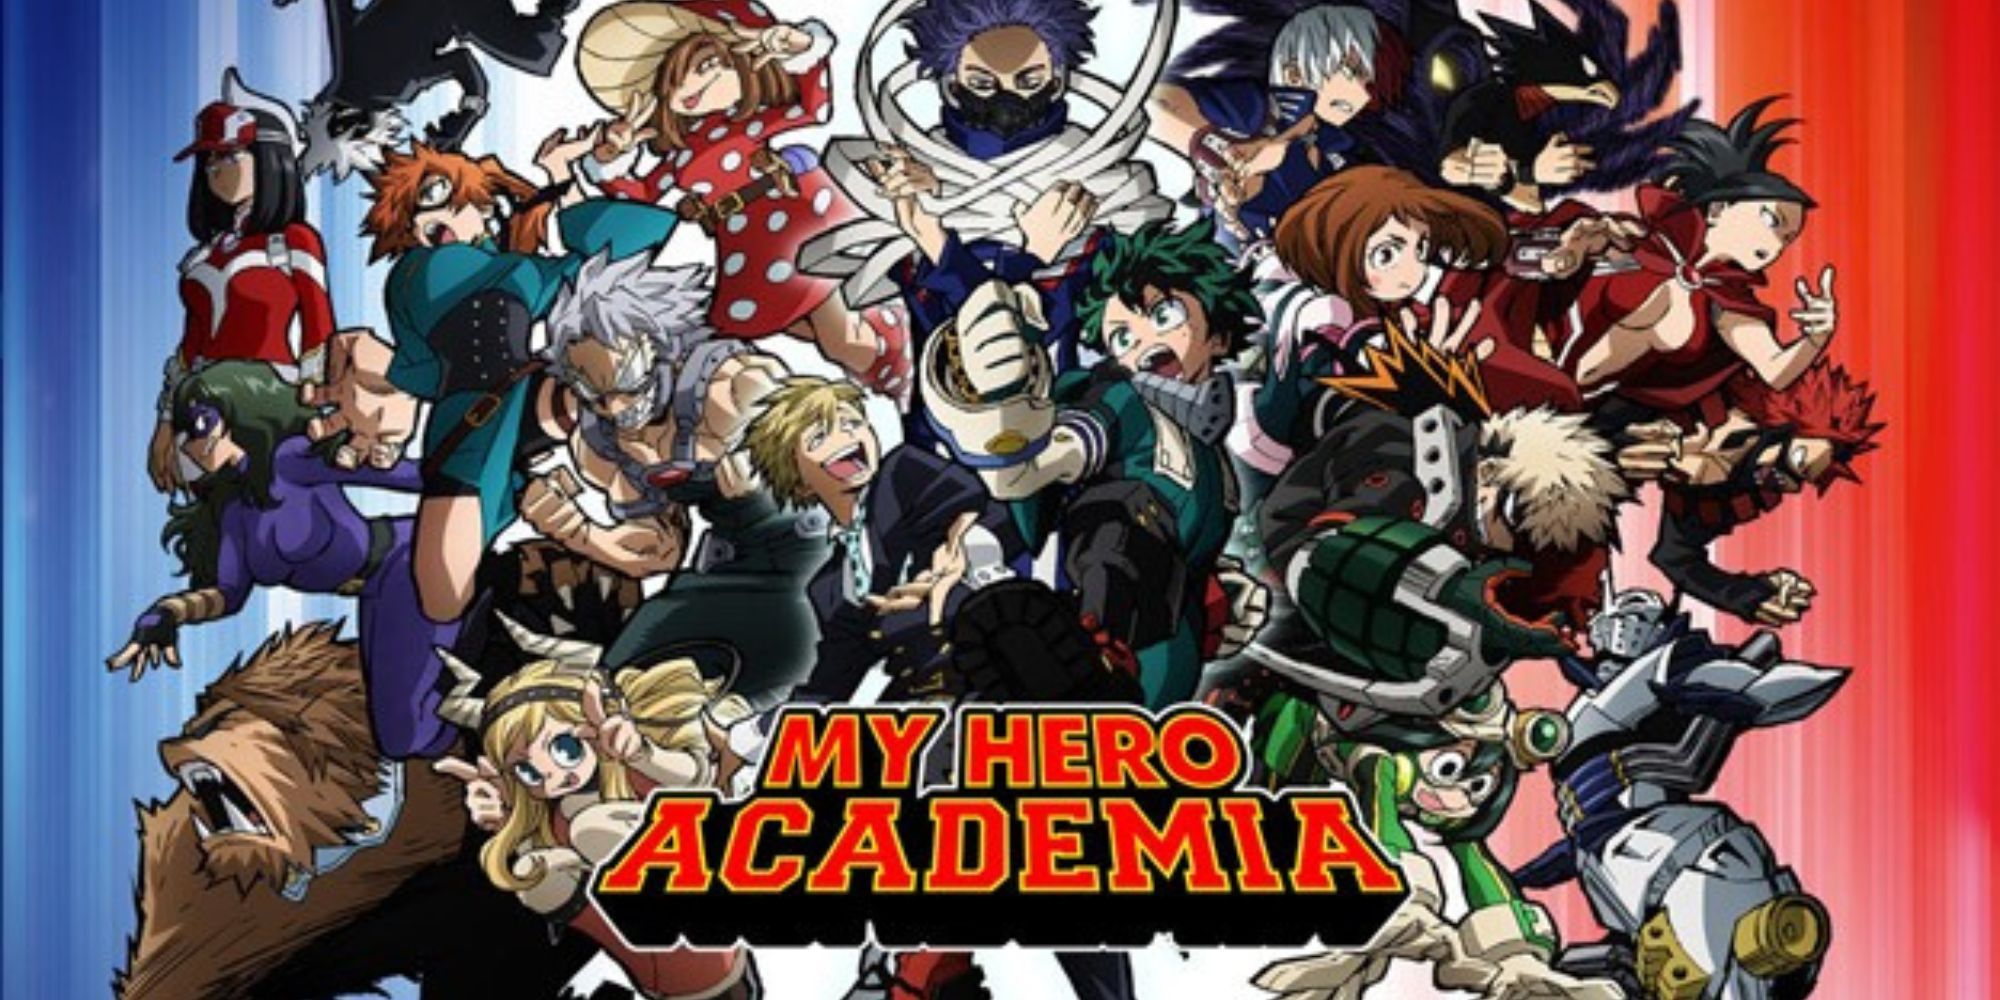 My Hero Academia live action adaptation announced